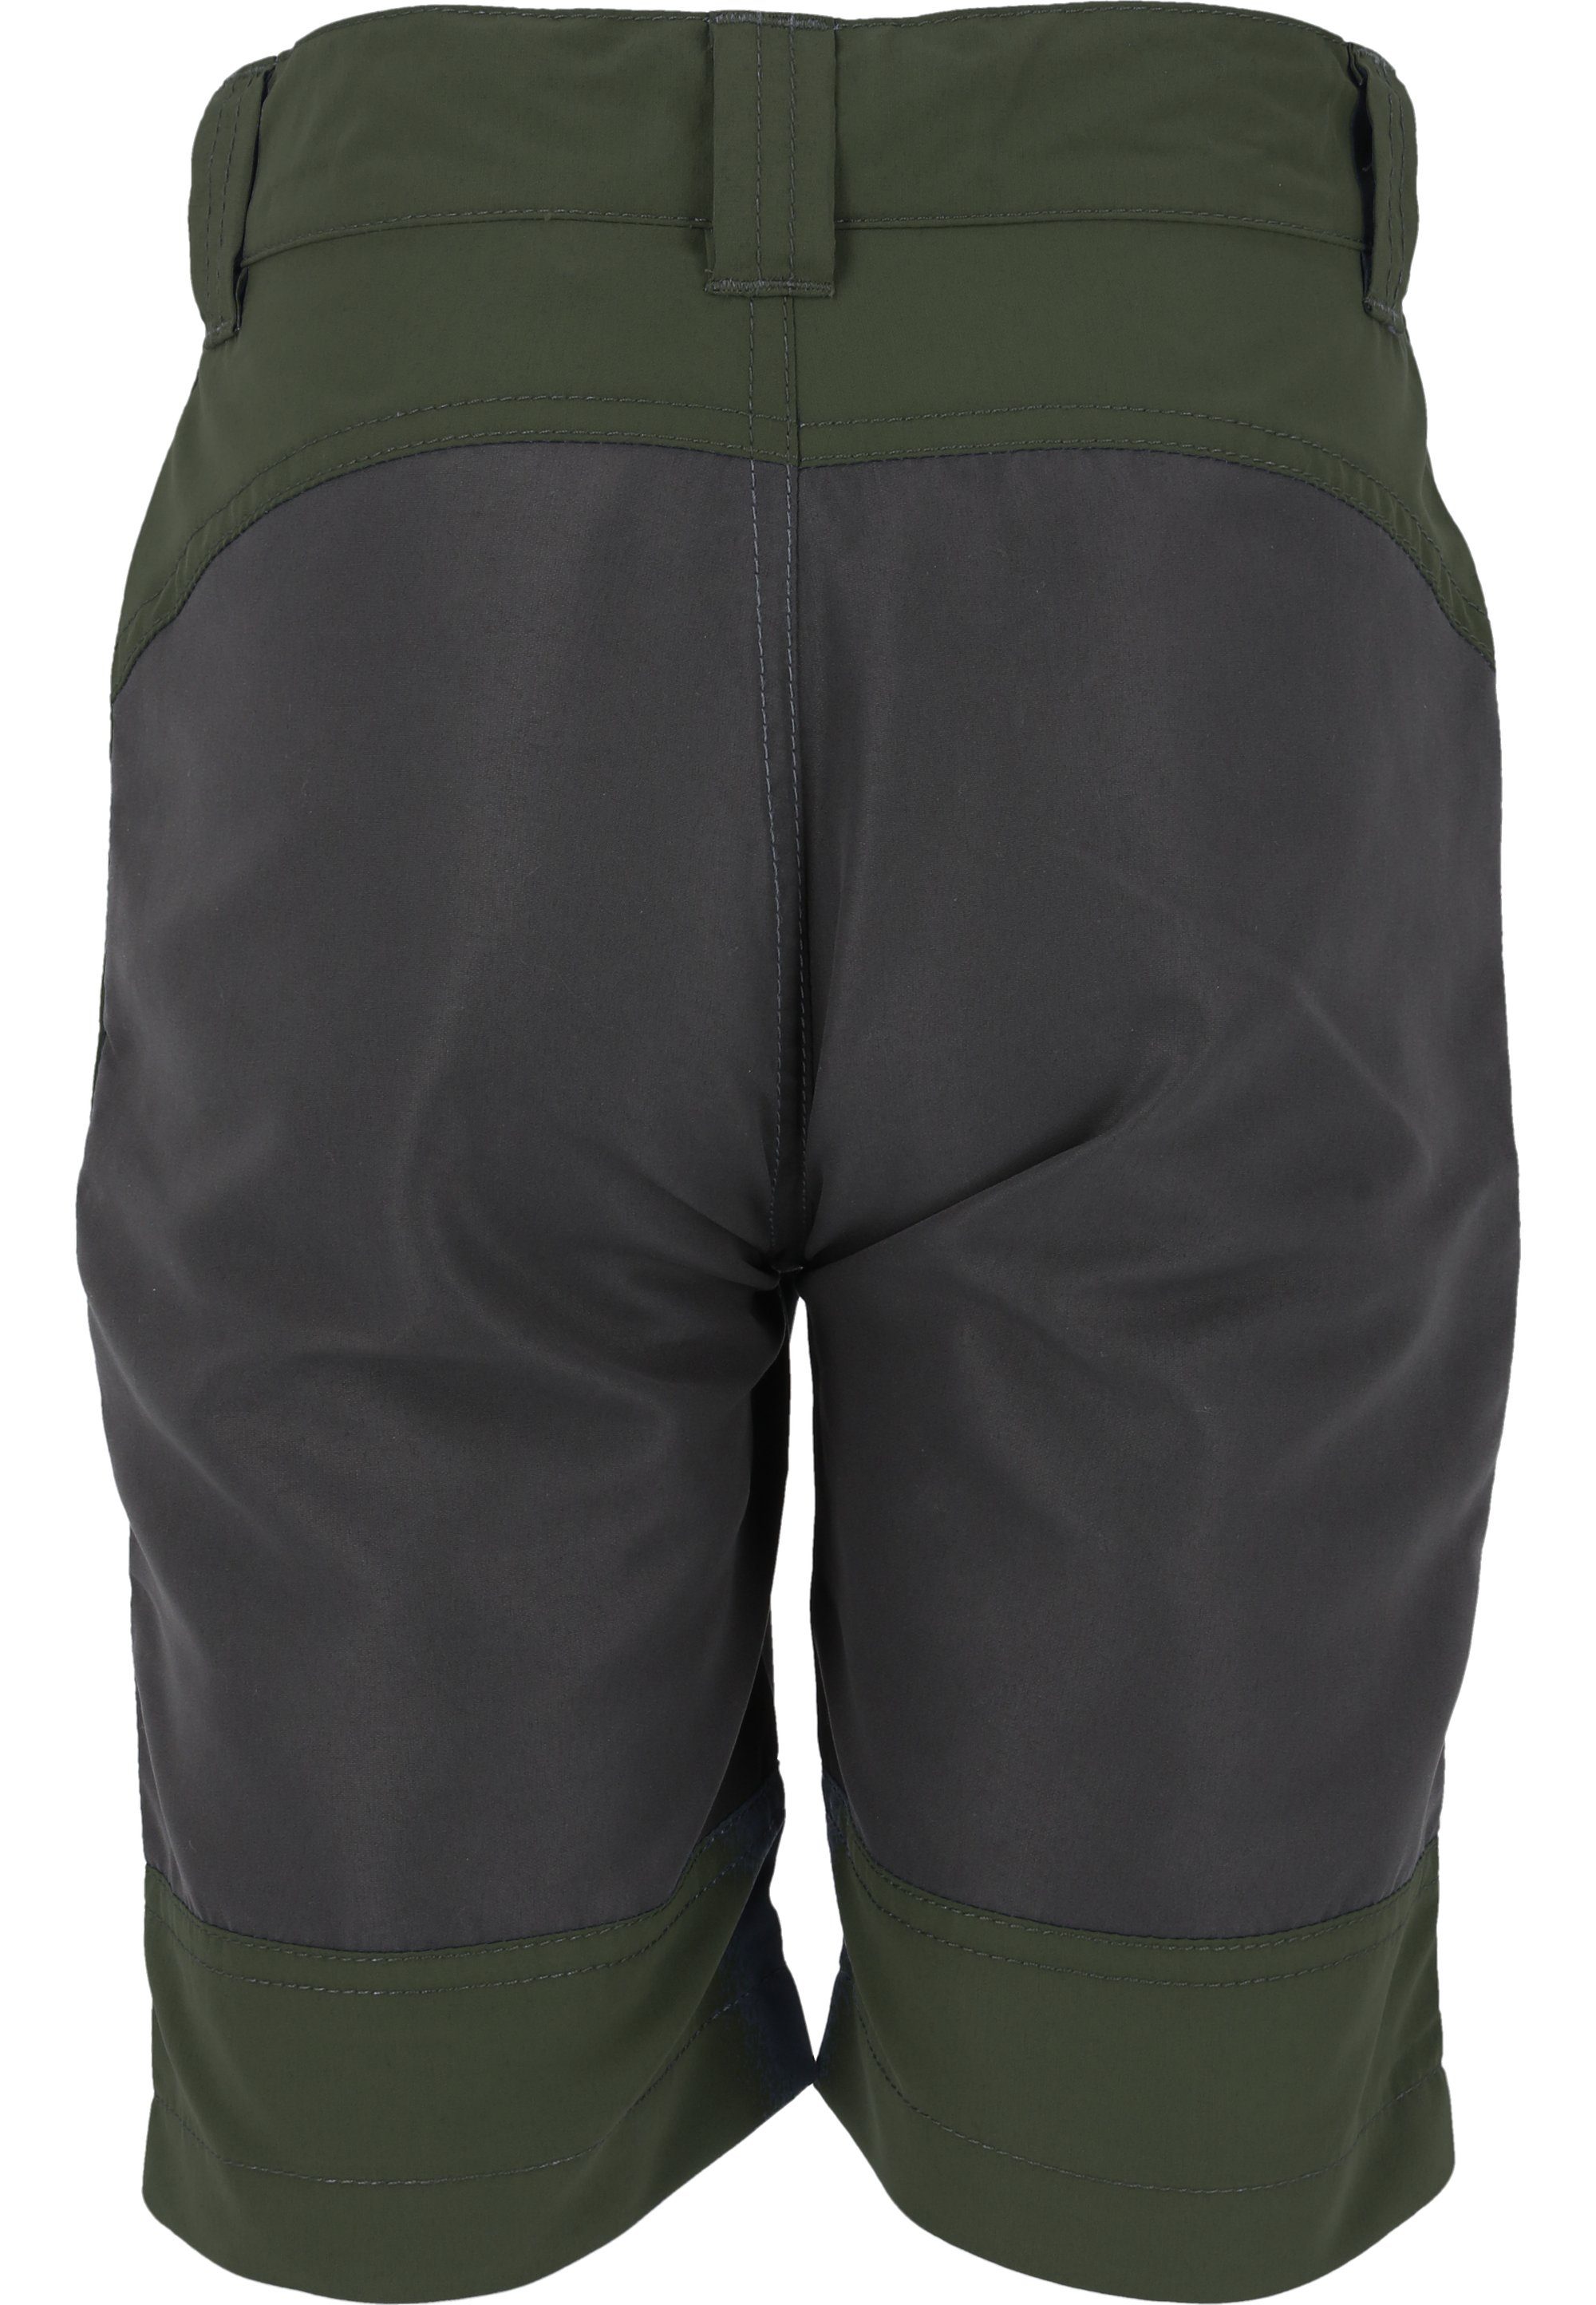 ZIGZAG aus Shorts olivgrün-schwarz Atlantic robustem Material